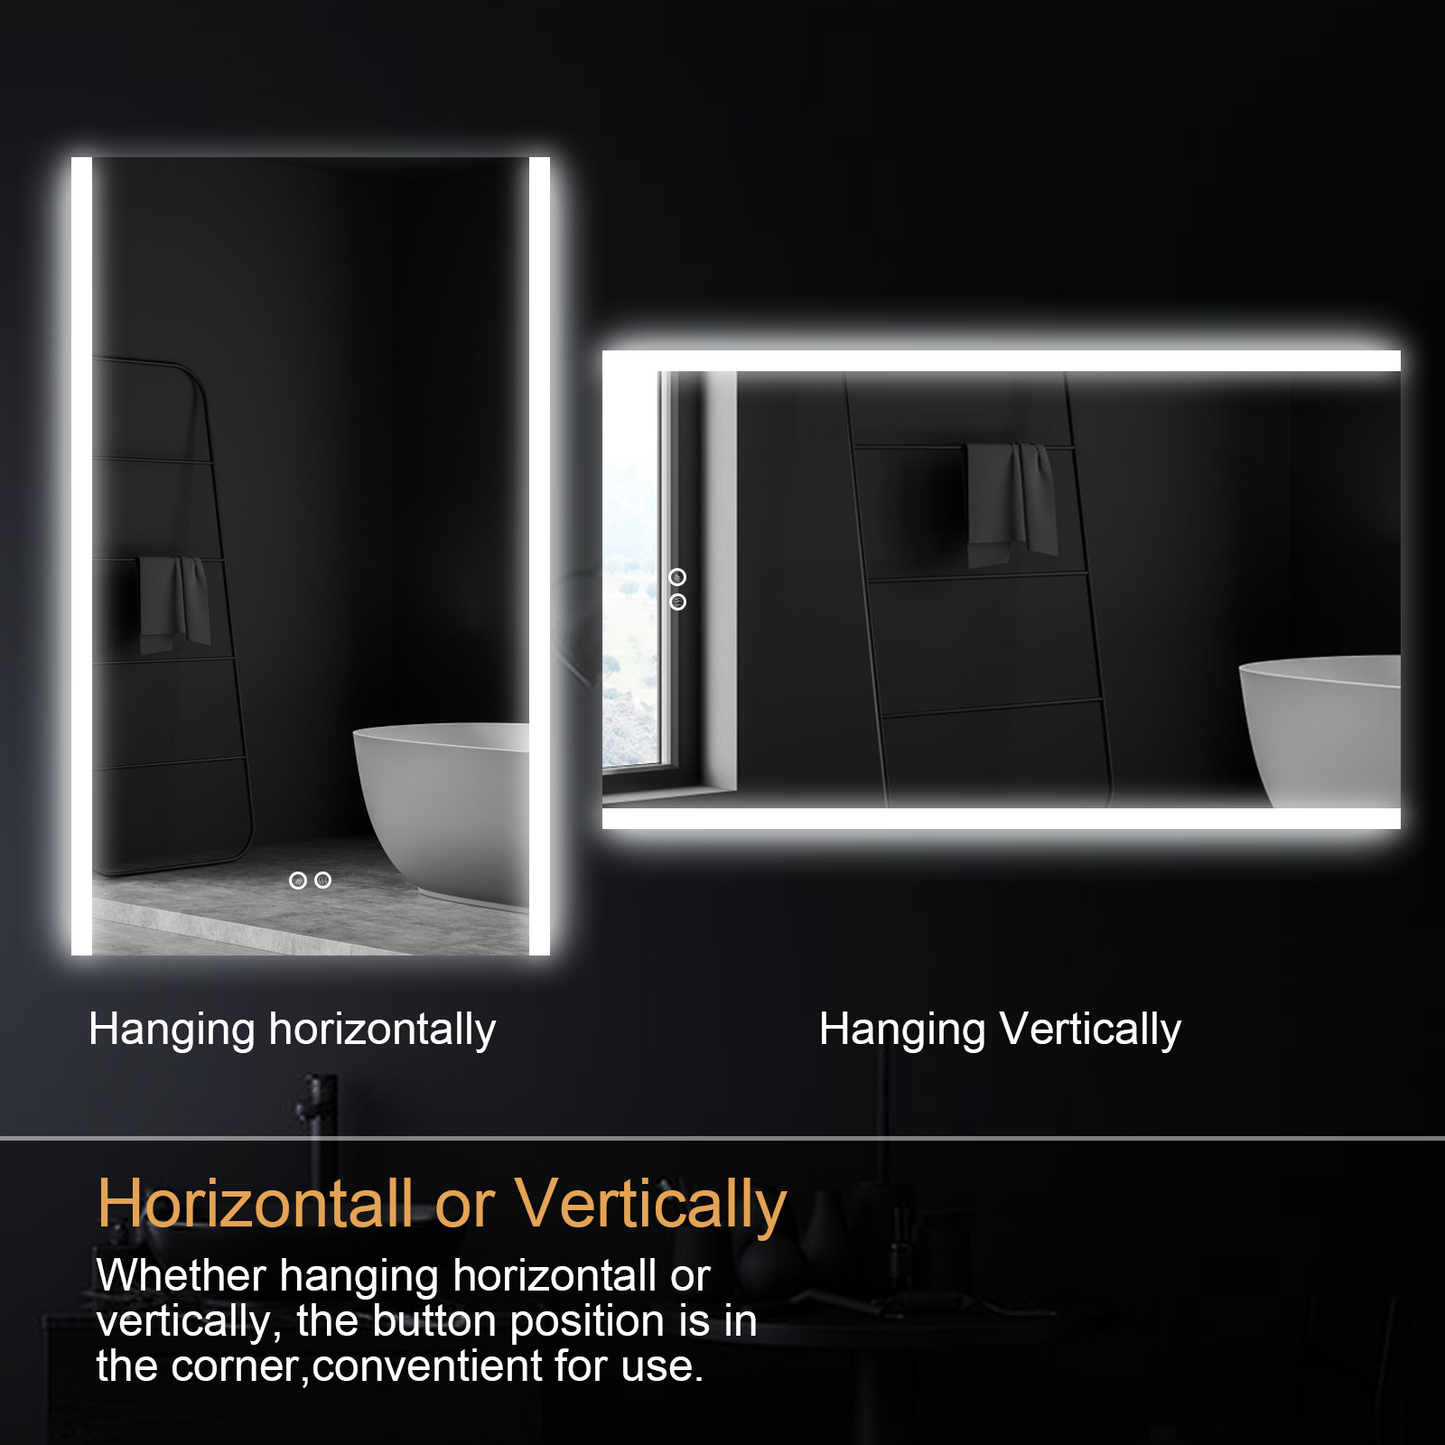 Bathroom / Vanity Mirror